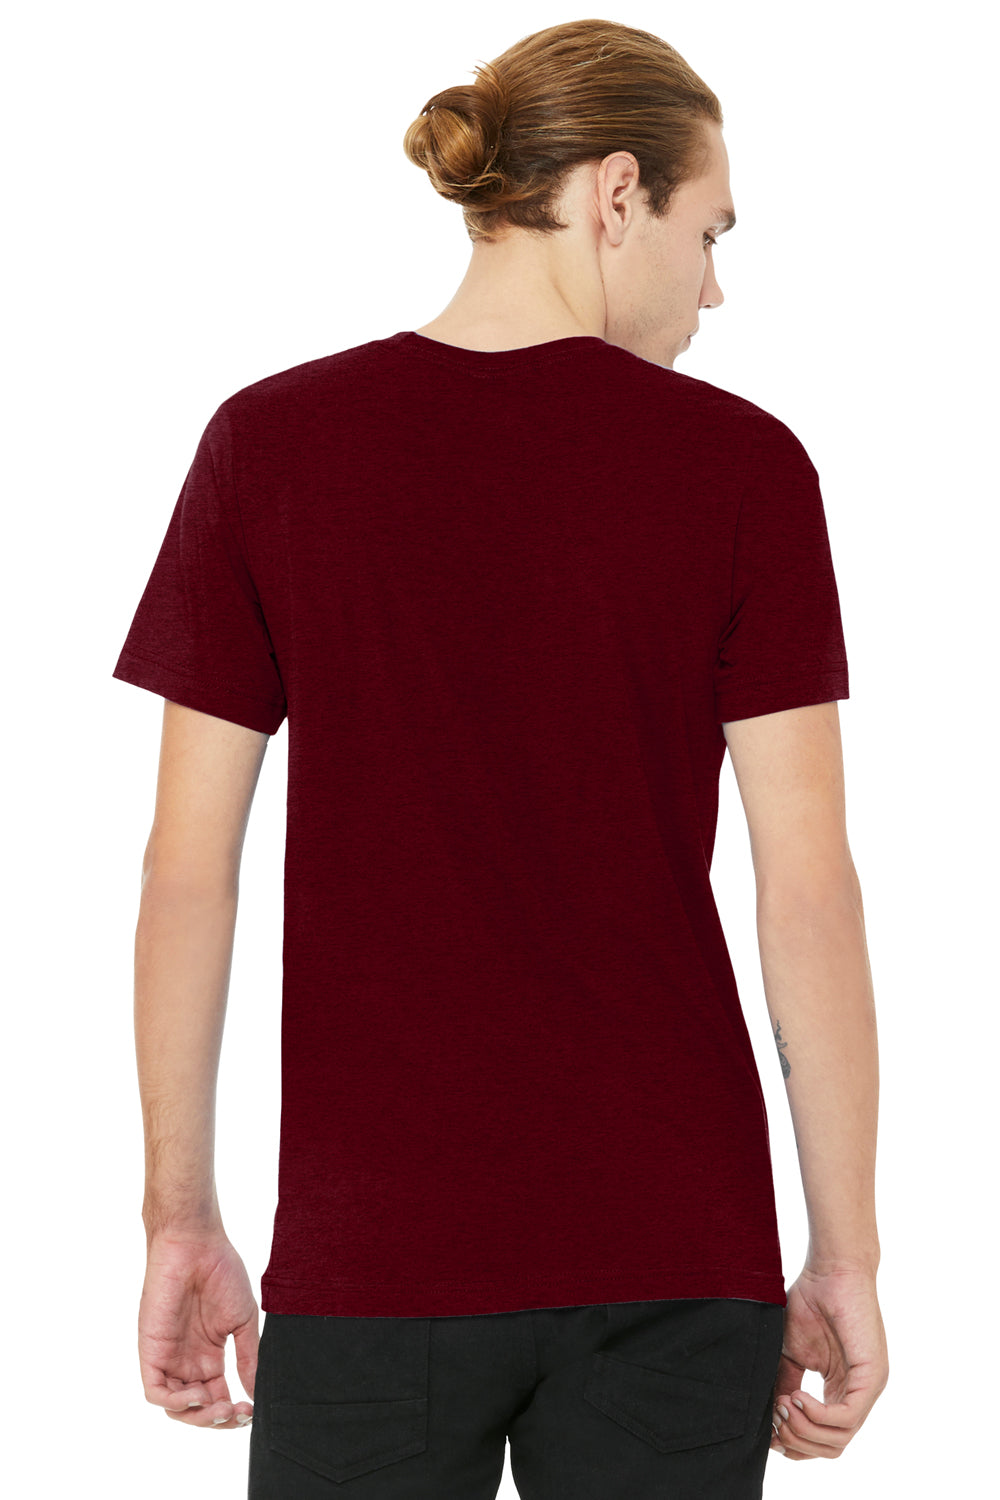 Bella + Canvas BC3005CVC Mens CVC Short Sleeve V-Neck T-Shirt Heather Cardinal Red Model Back